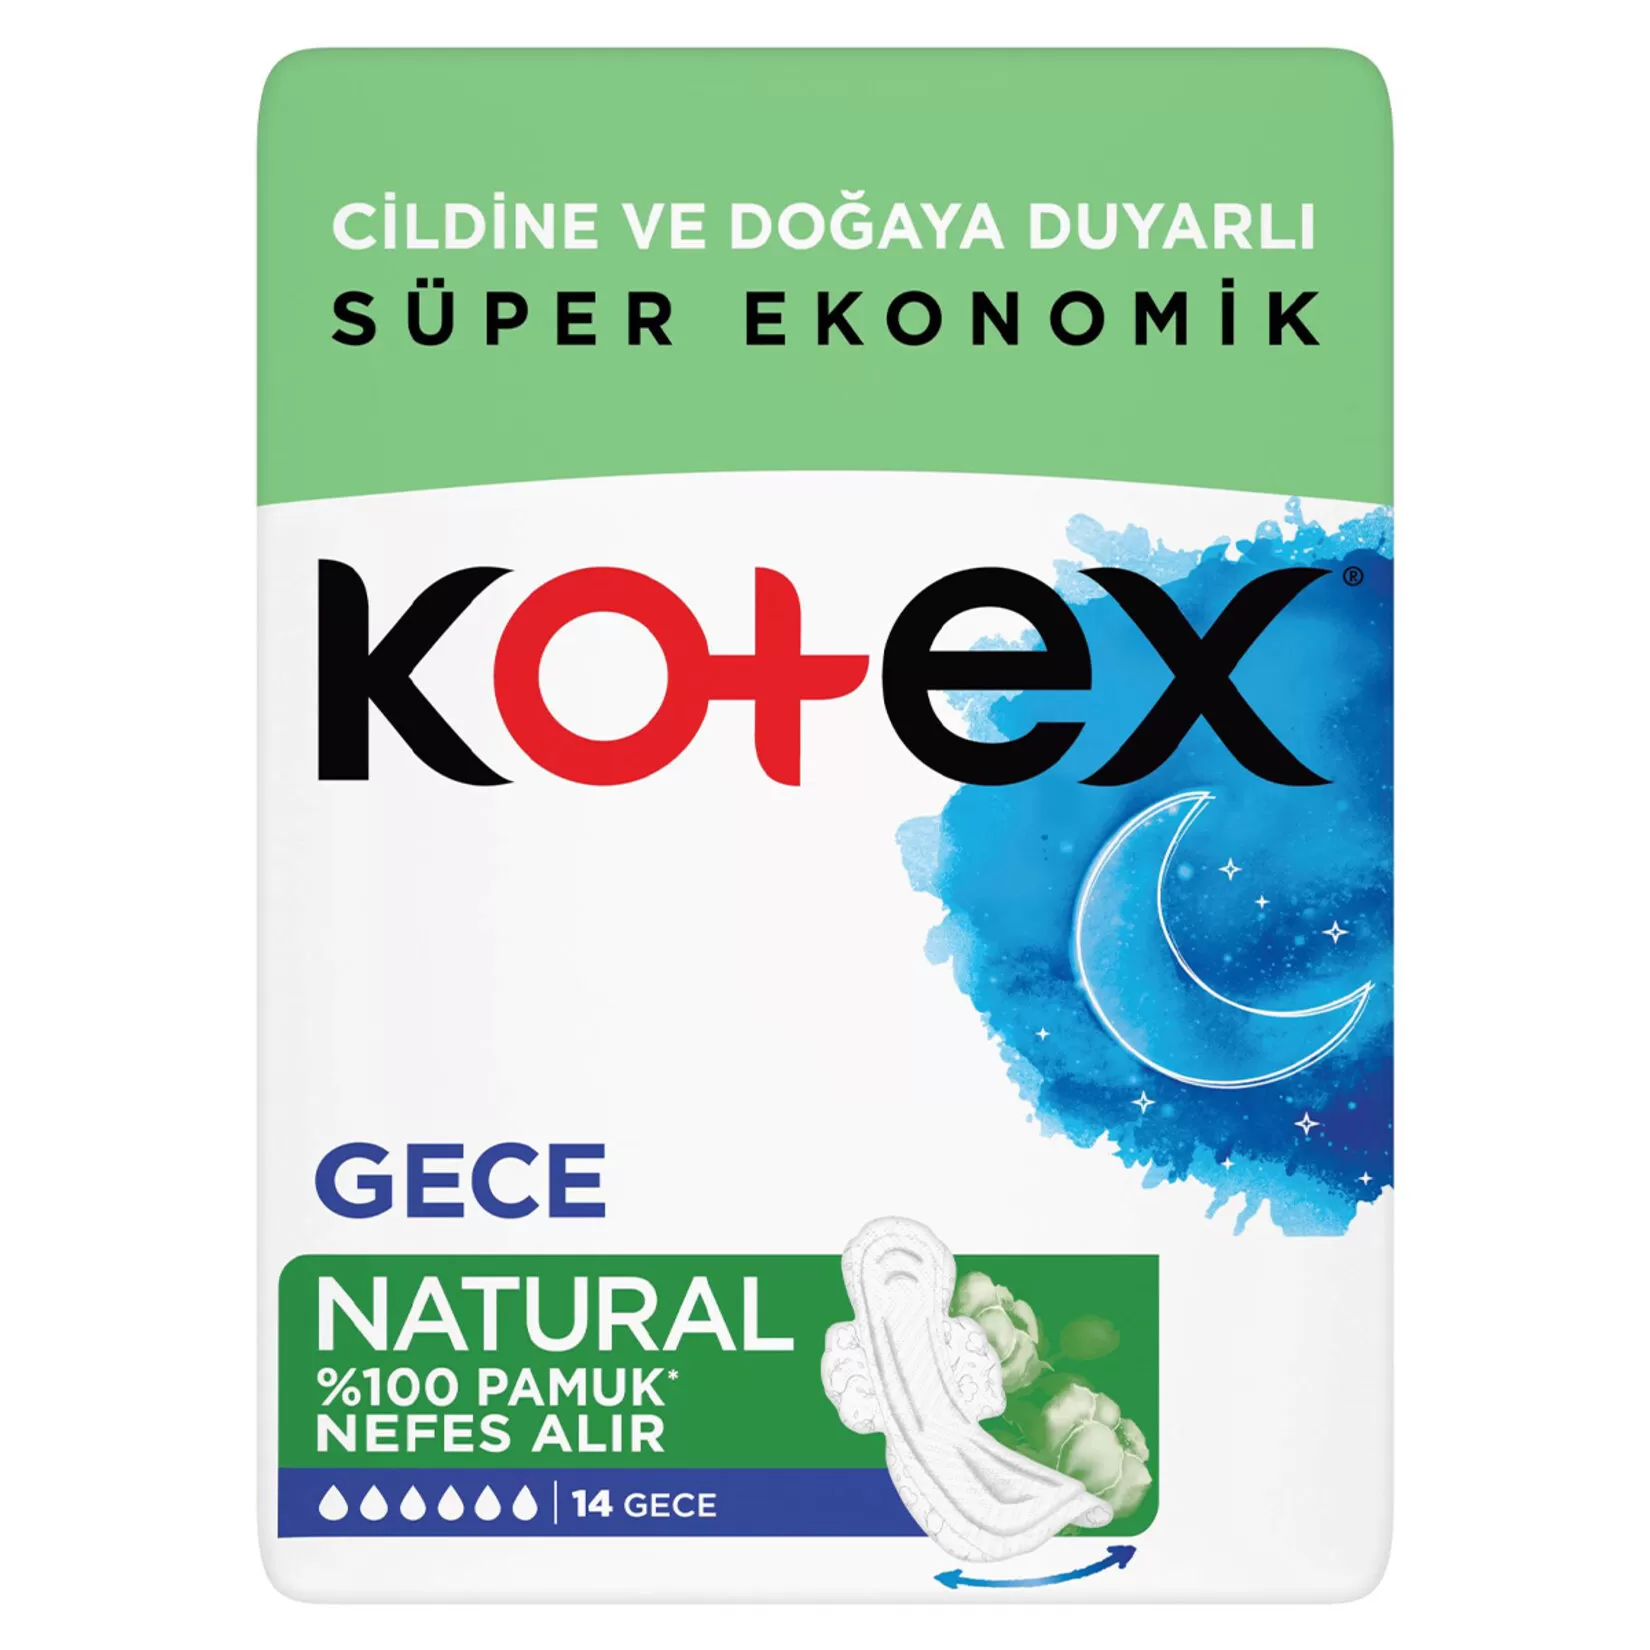 Kotex Natural Ped Gece 14 Adet